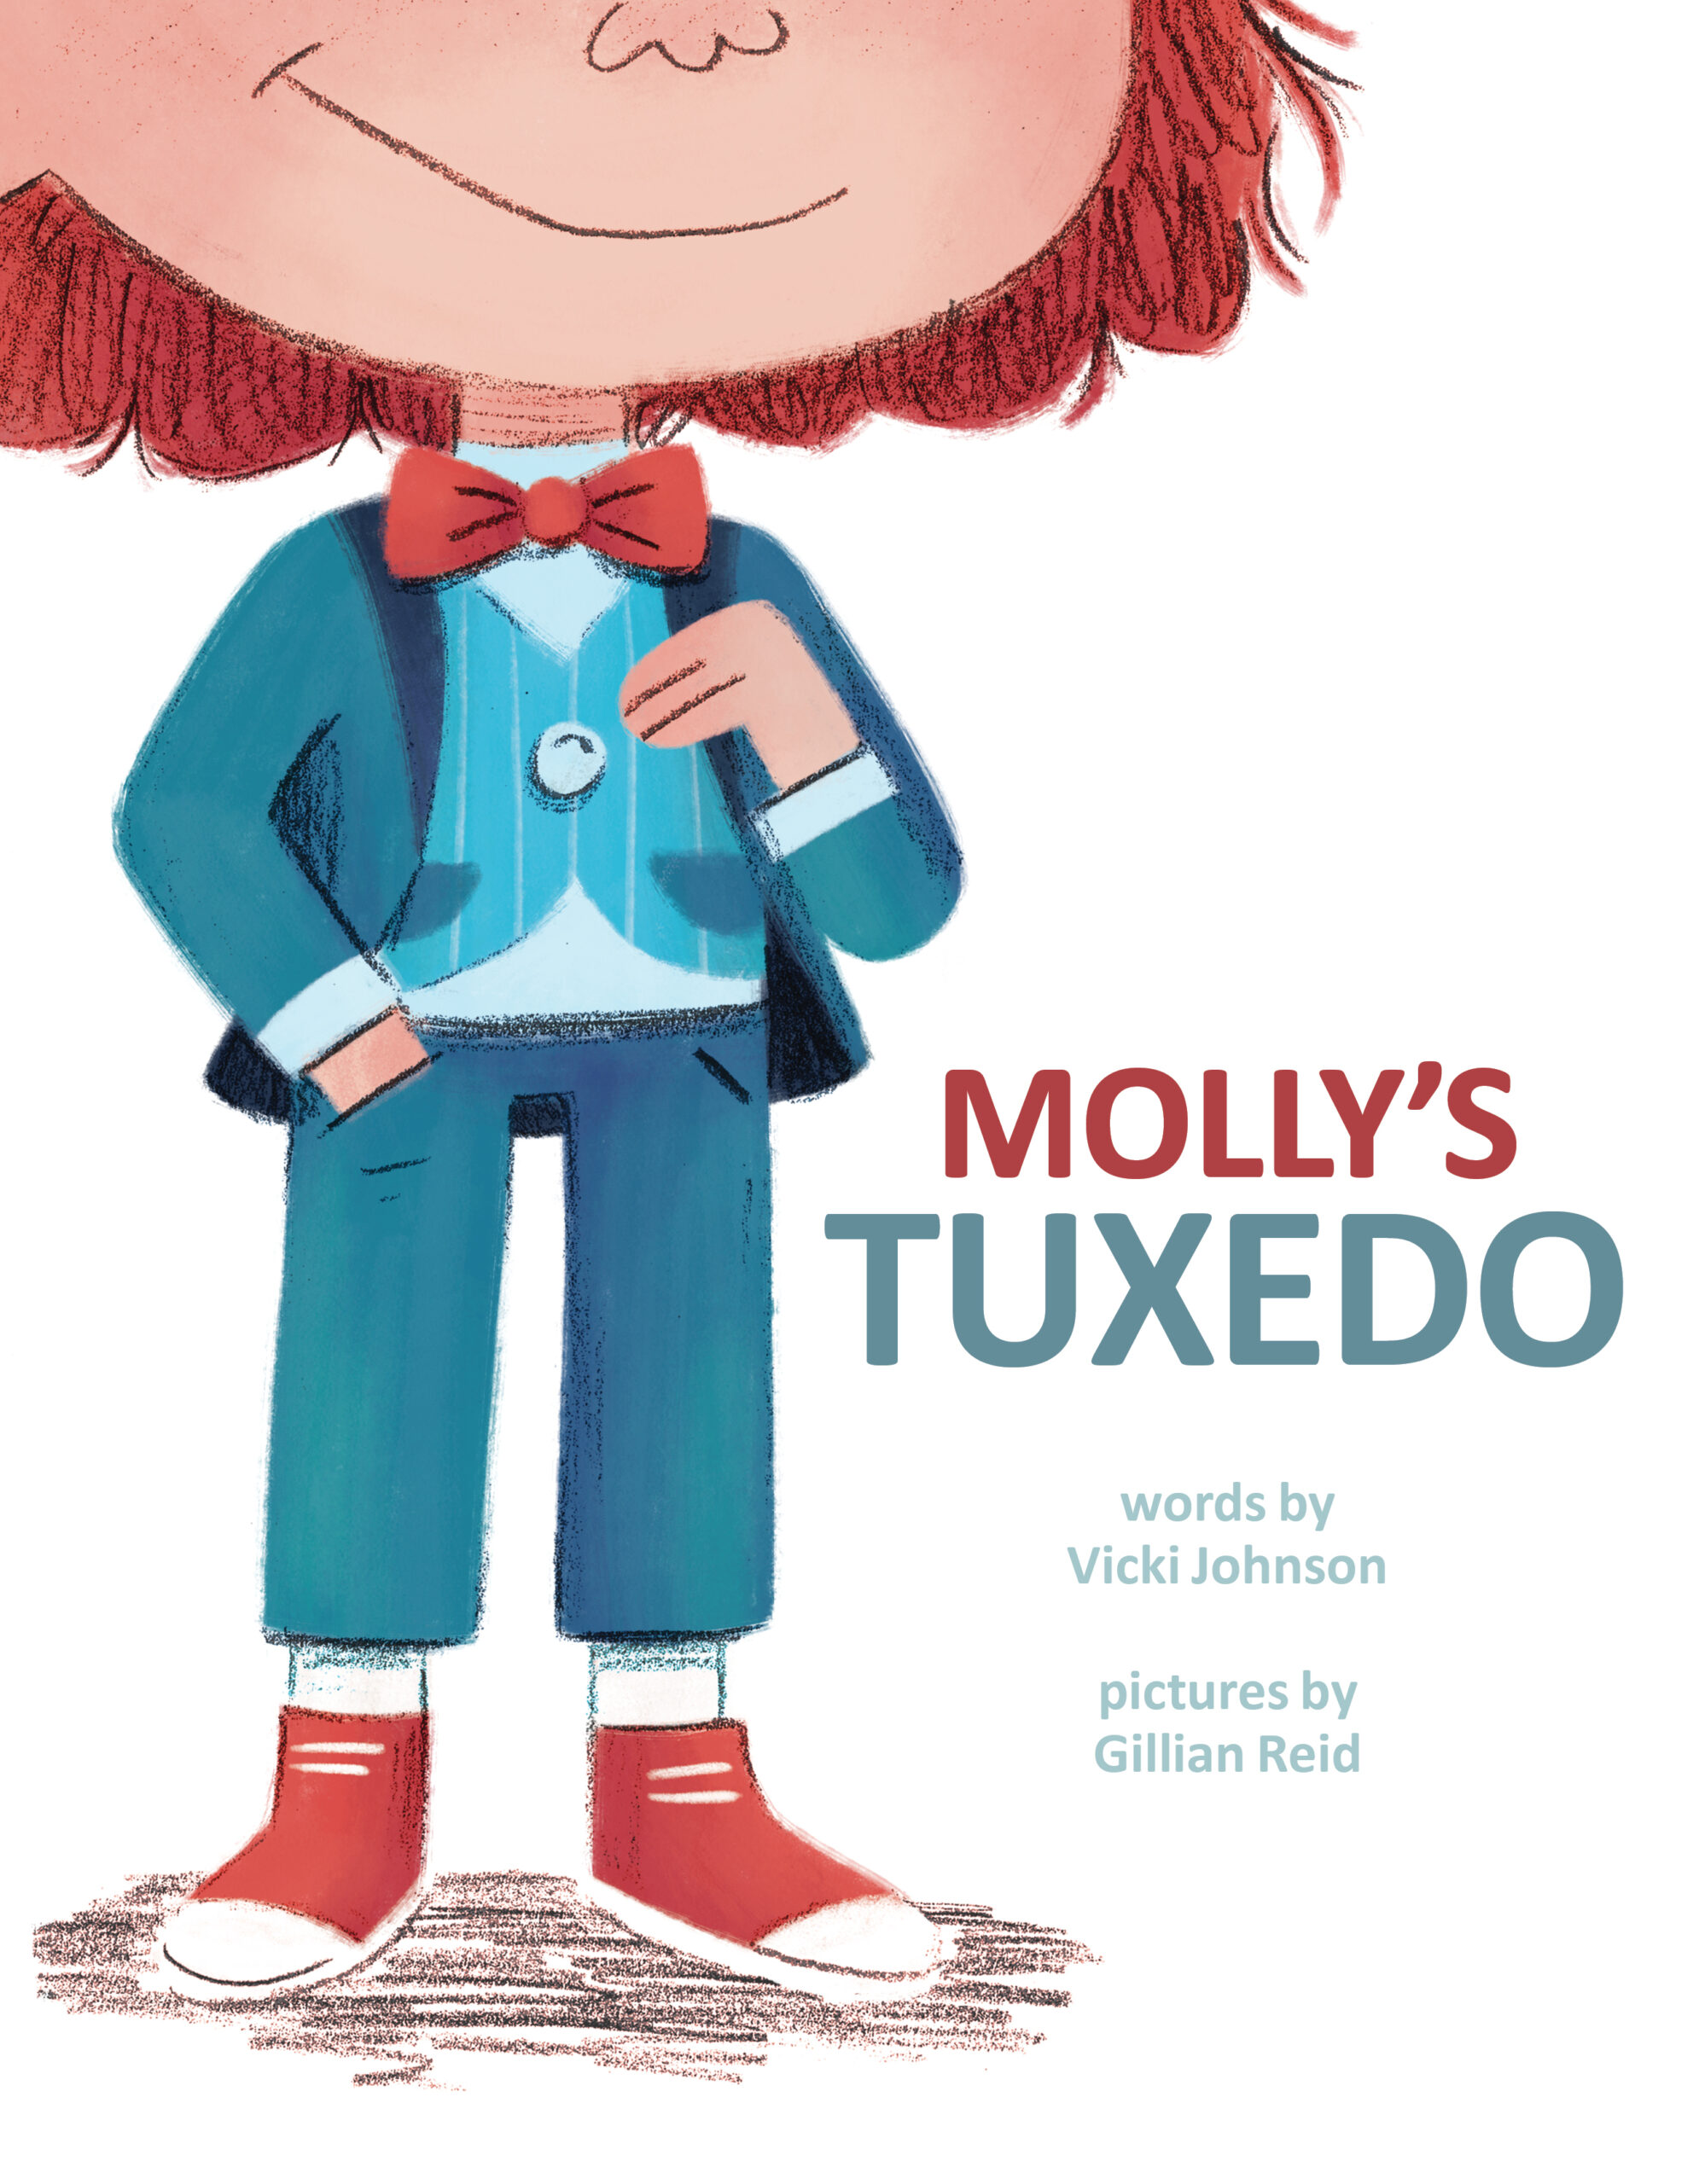 Molly’s Tuxedo Interview with Vicki Johnson & Gillian Reid